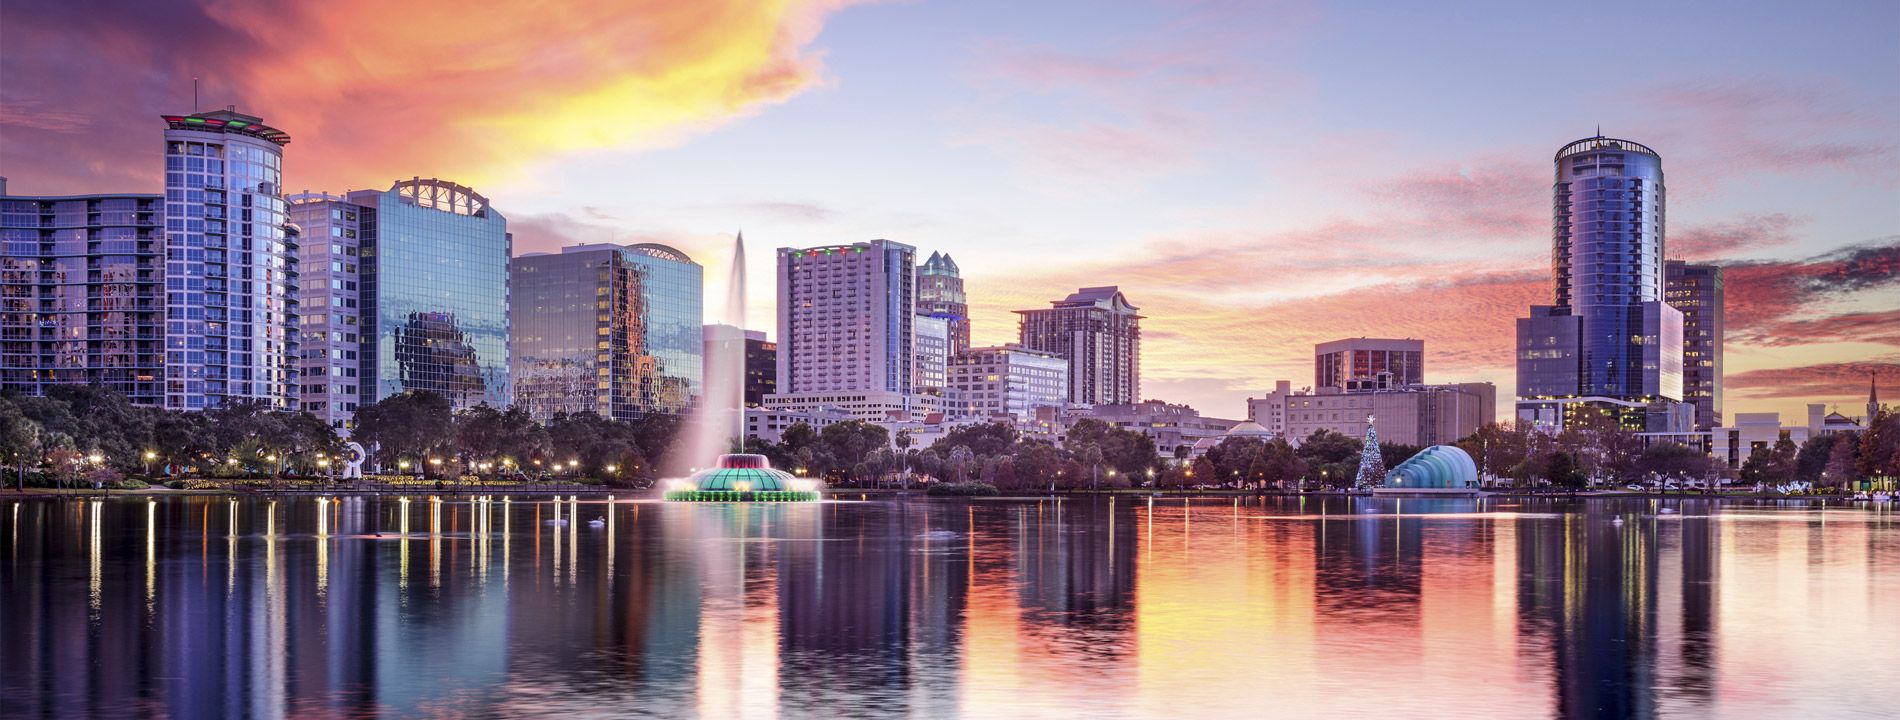 The city of Orlando.